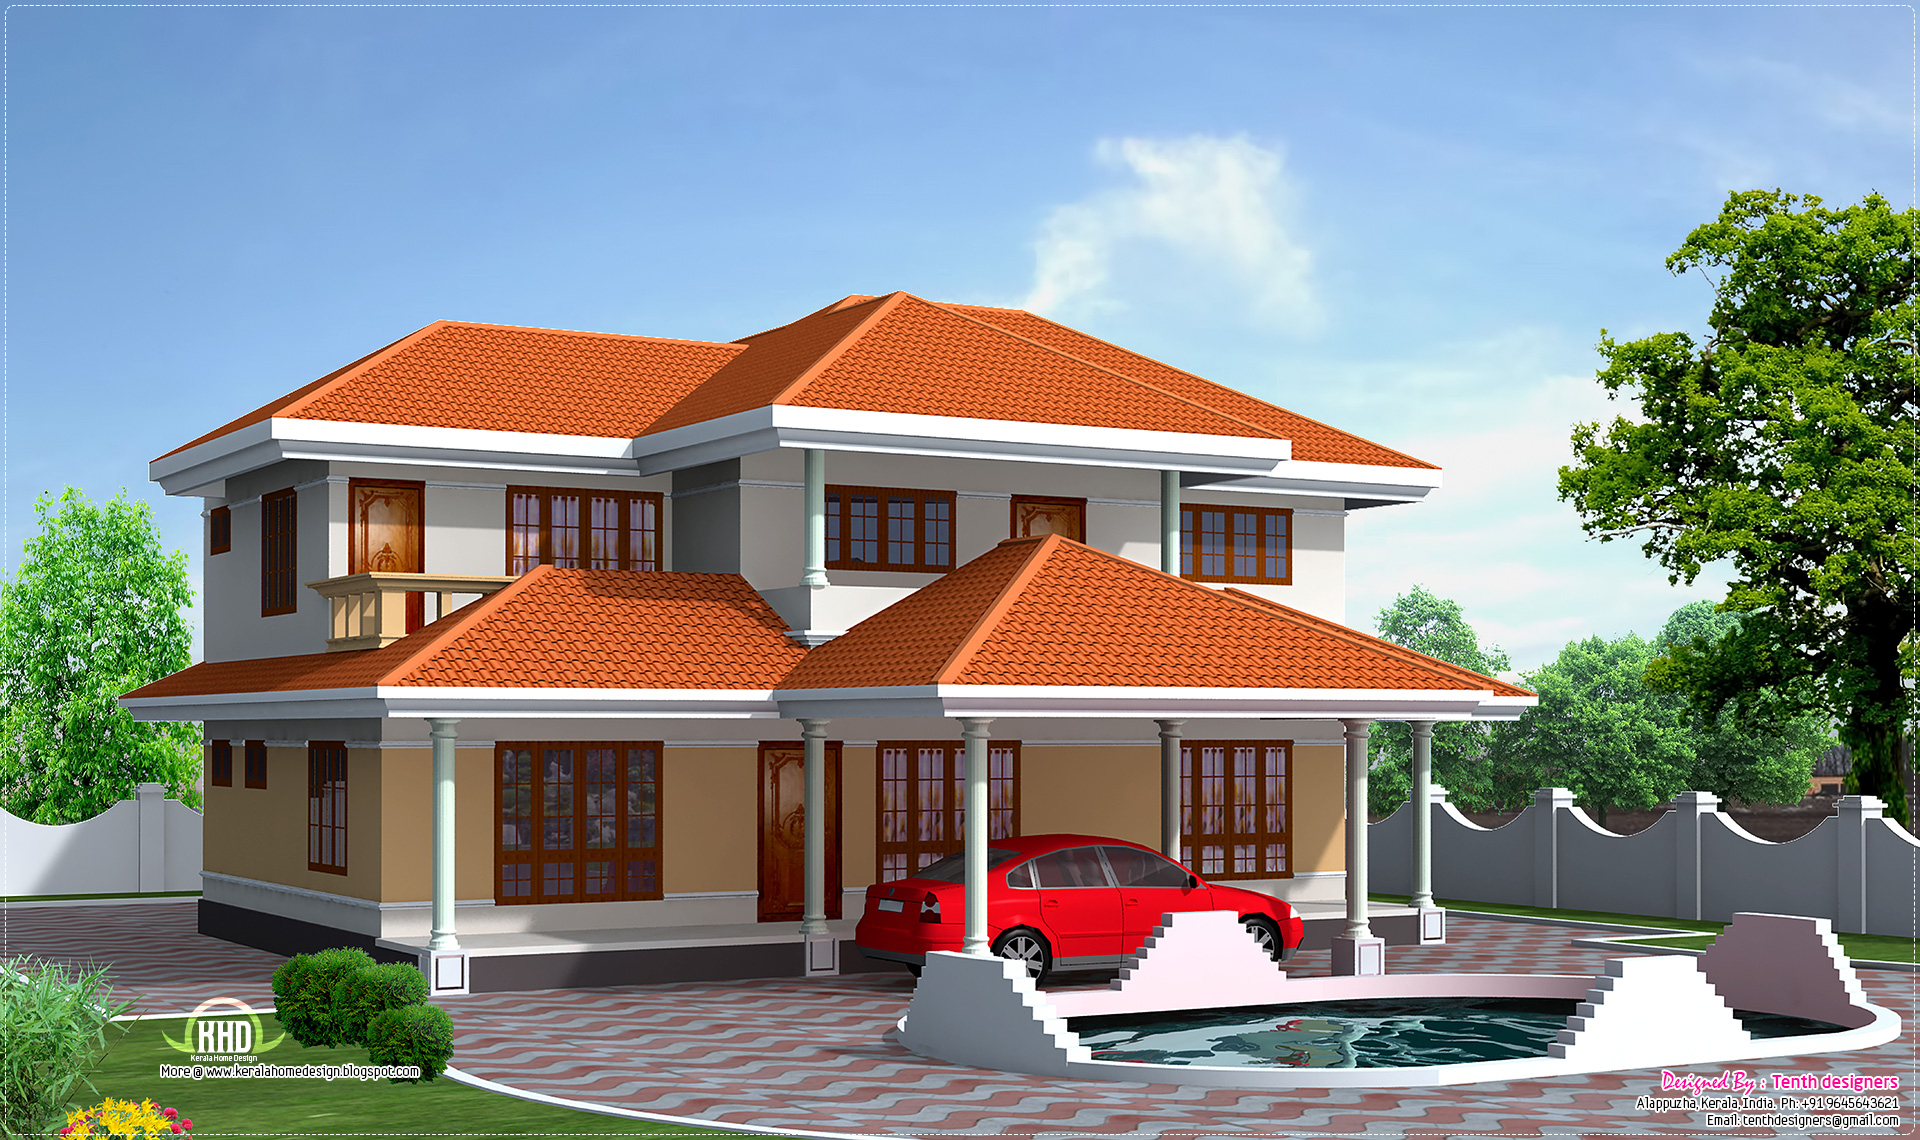  Four  bedroom  house  elevation  in 2500 sq feet Kerala 